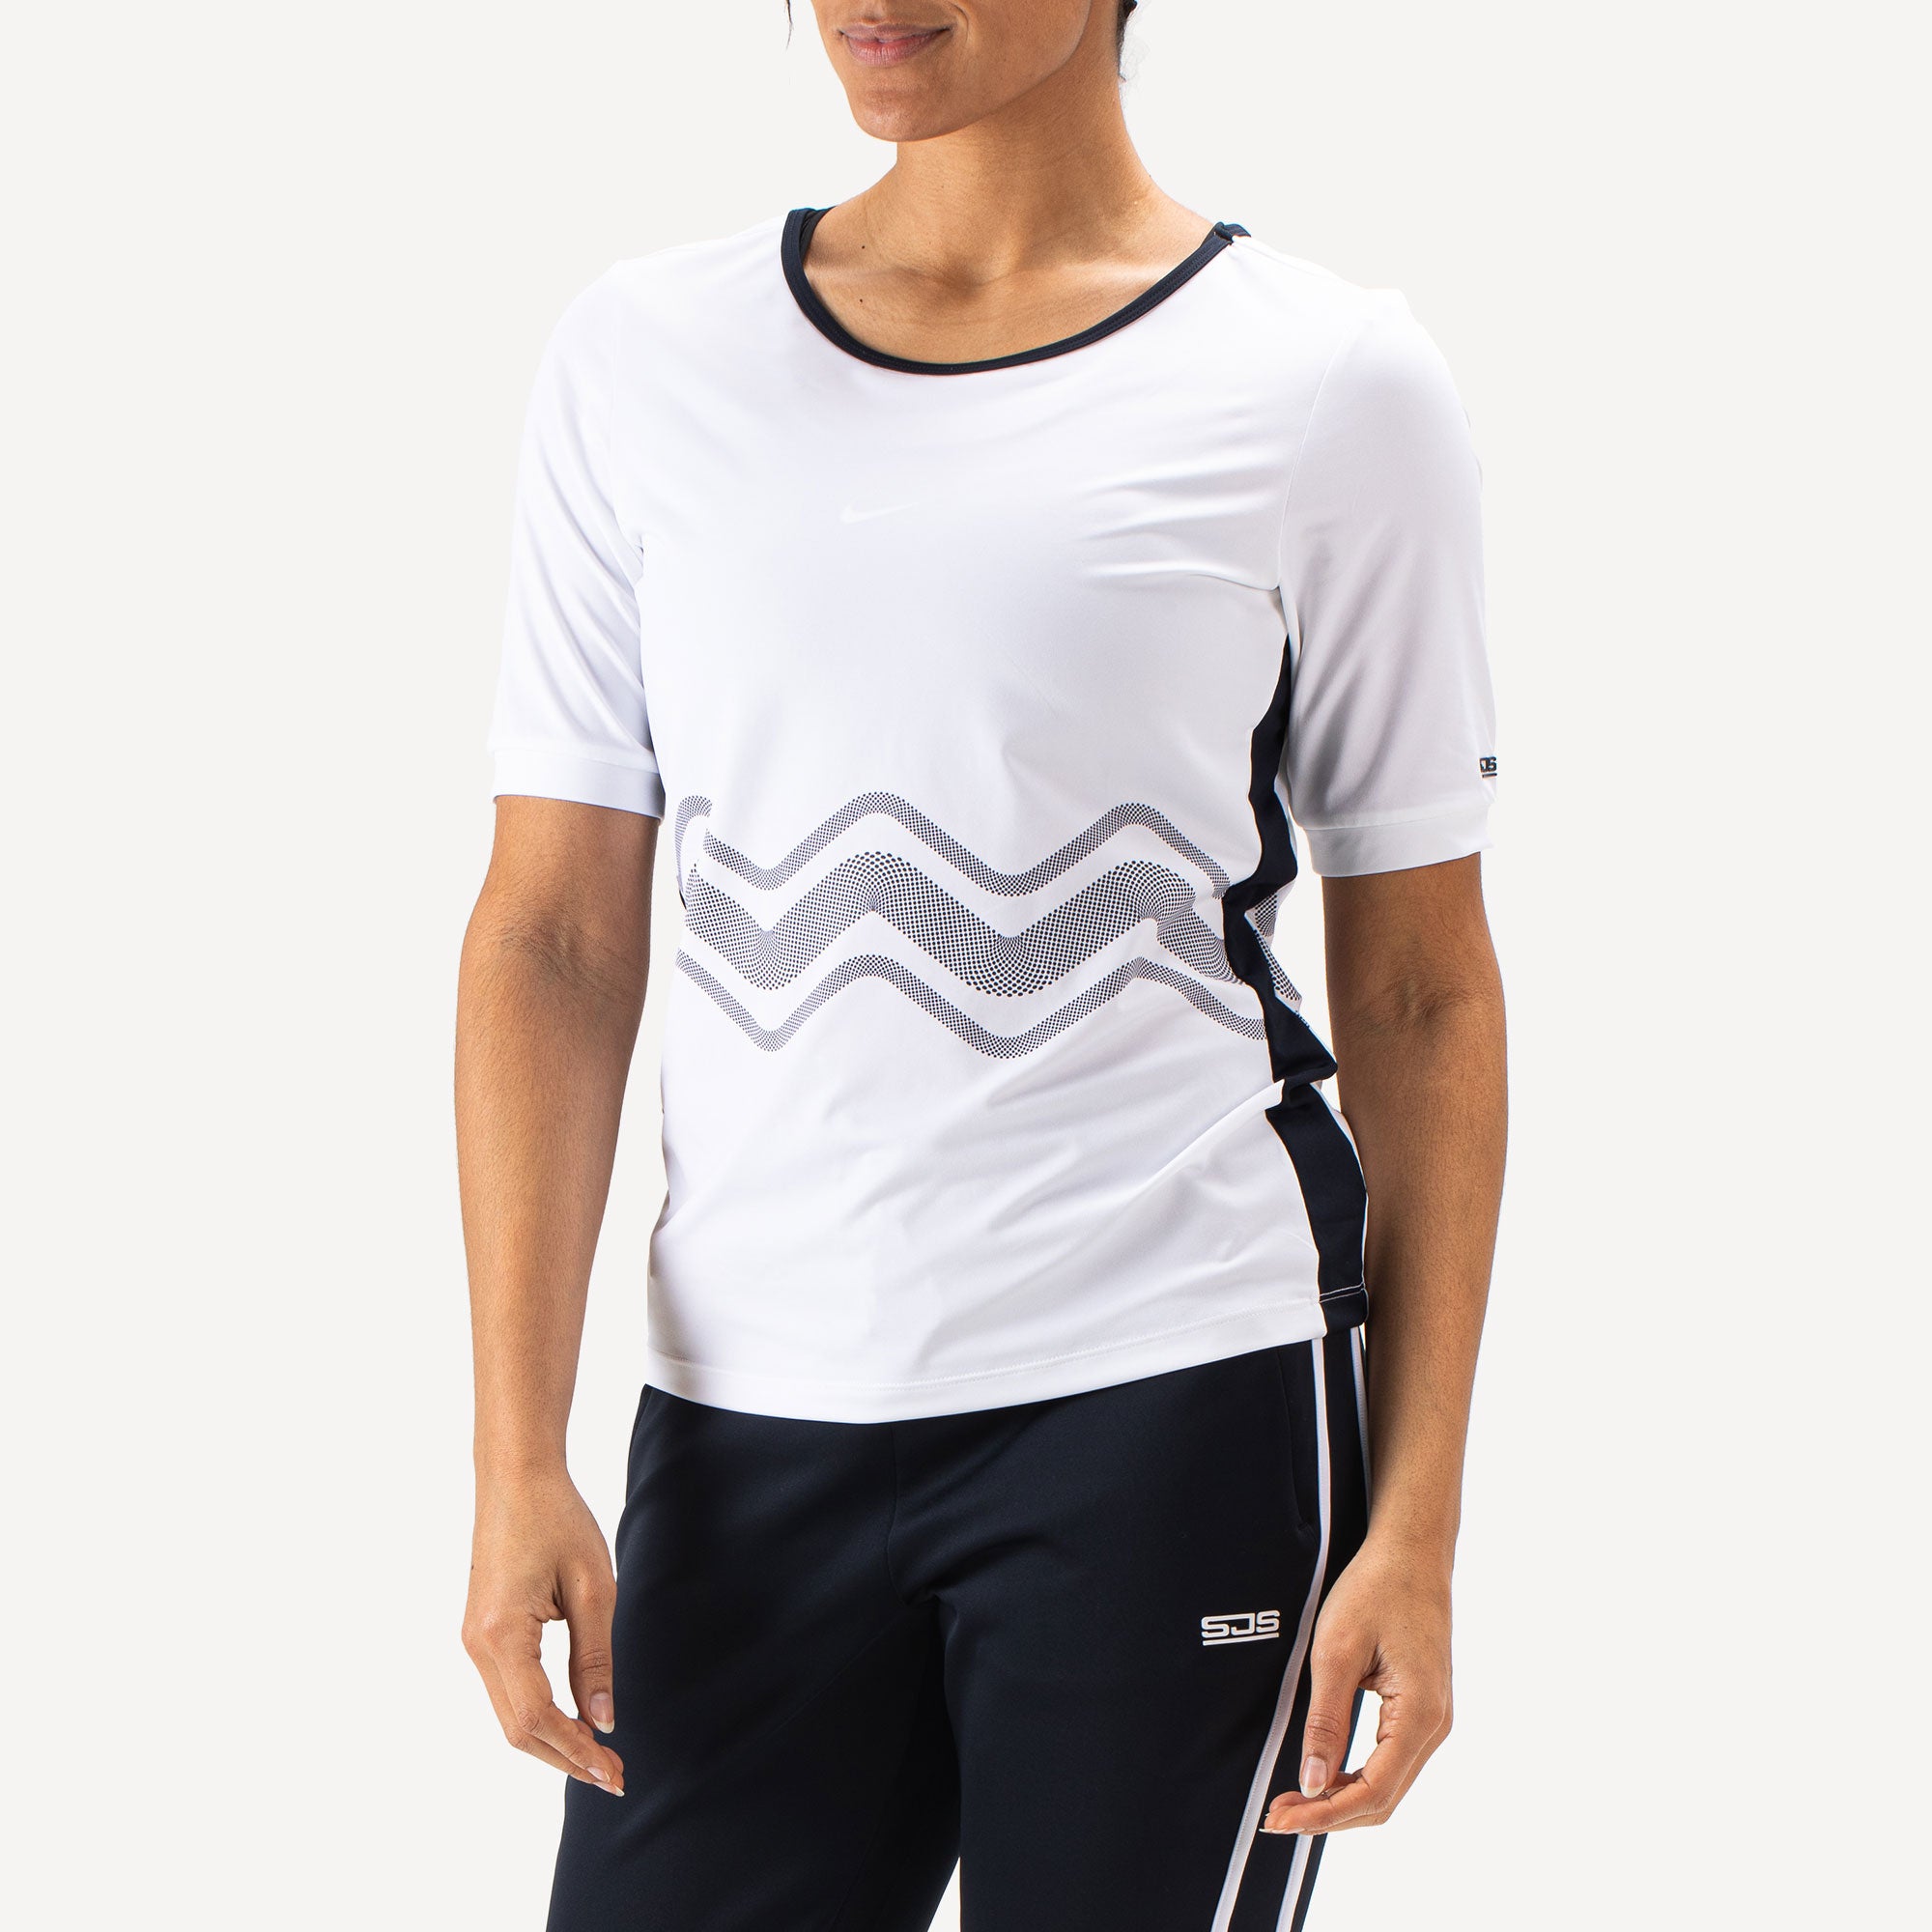 Sjeng Sports Ise Women's Tennis Shirt - White (1)